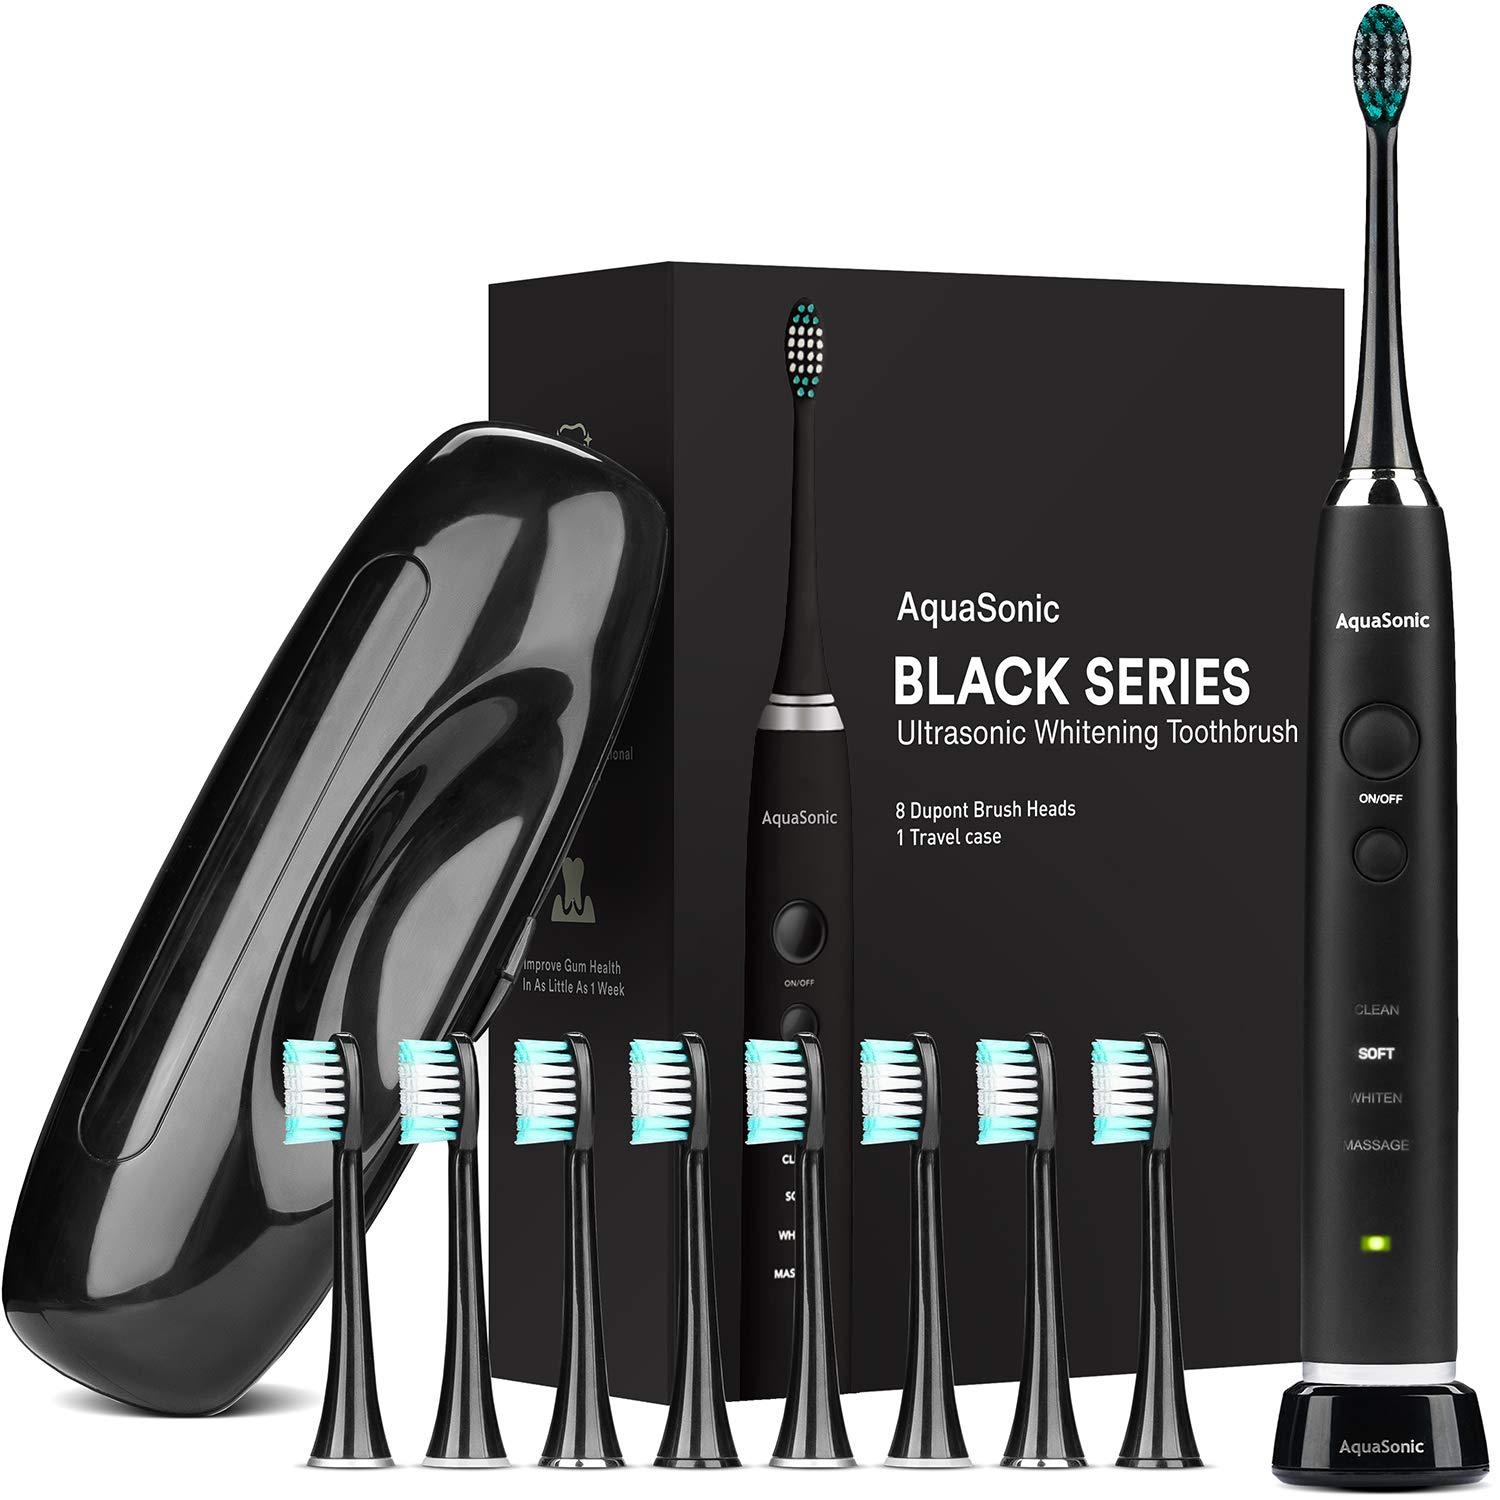 AquaSonic Black Series Ultra Whitening Toothbrush for $26 Shipped